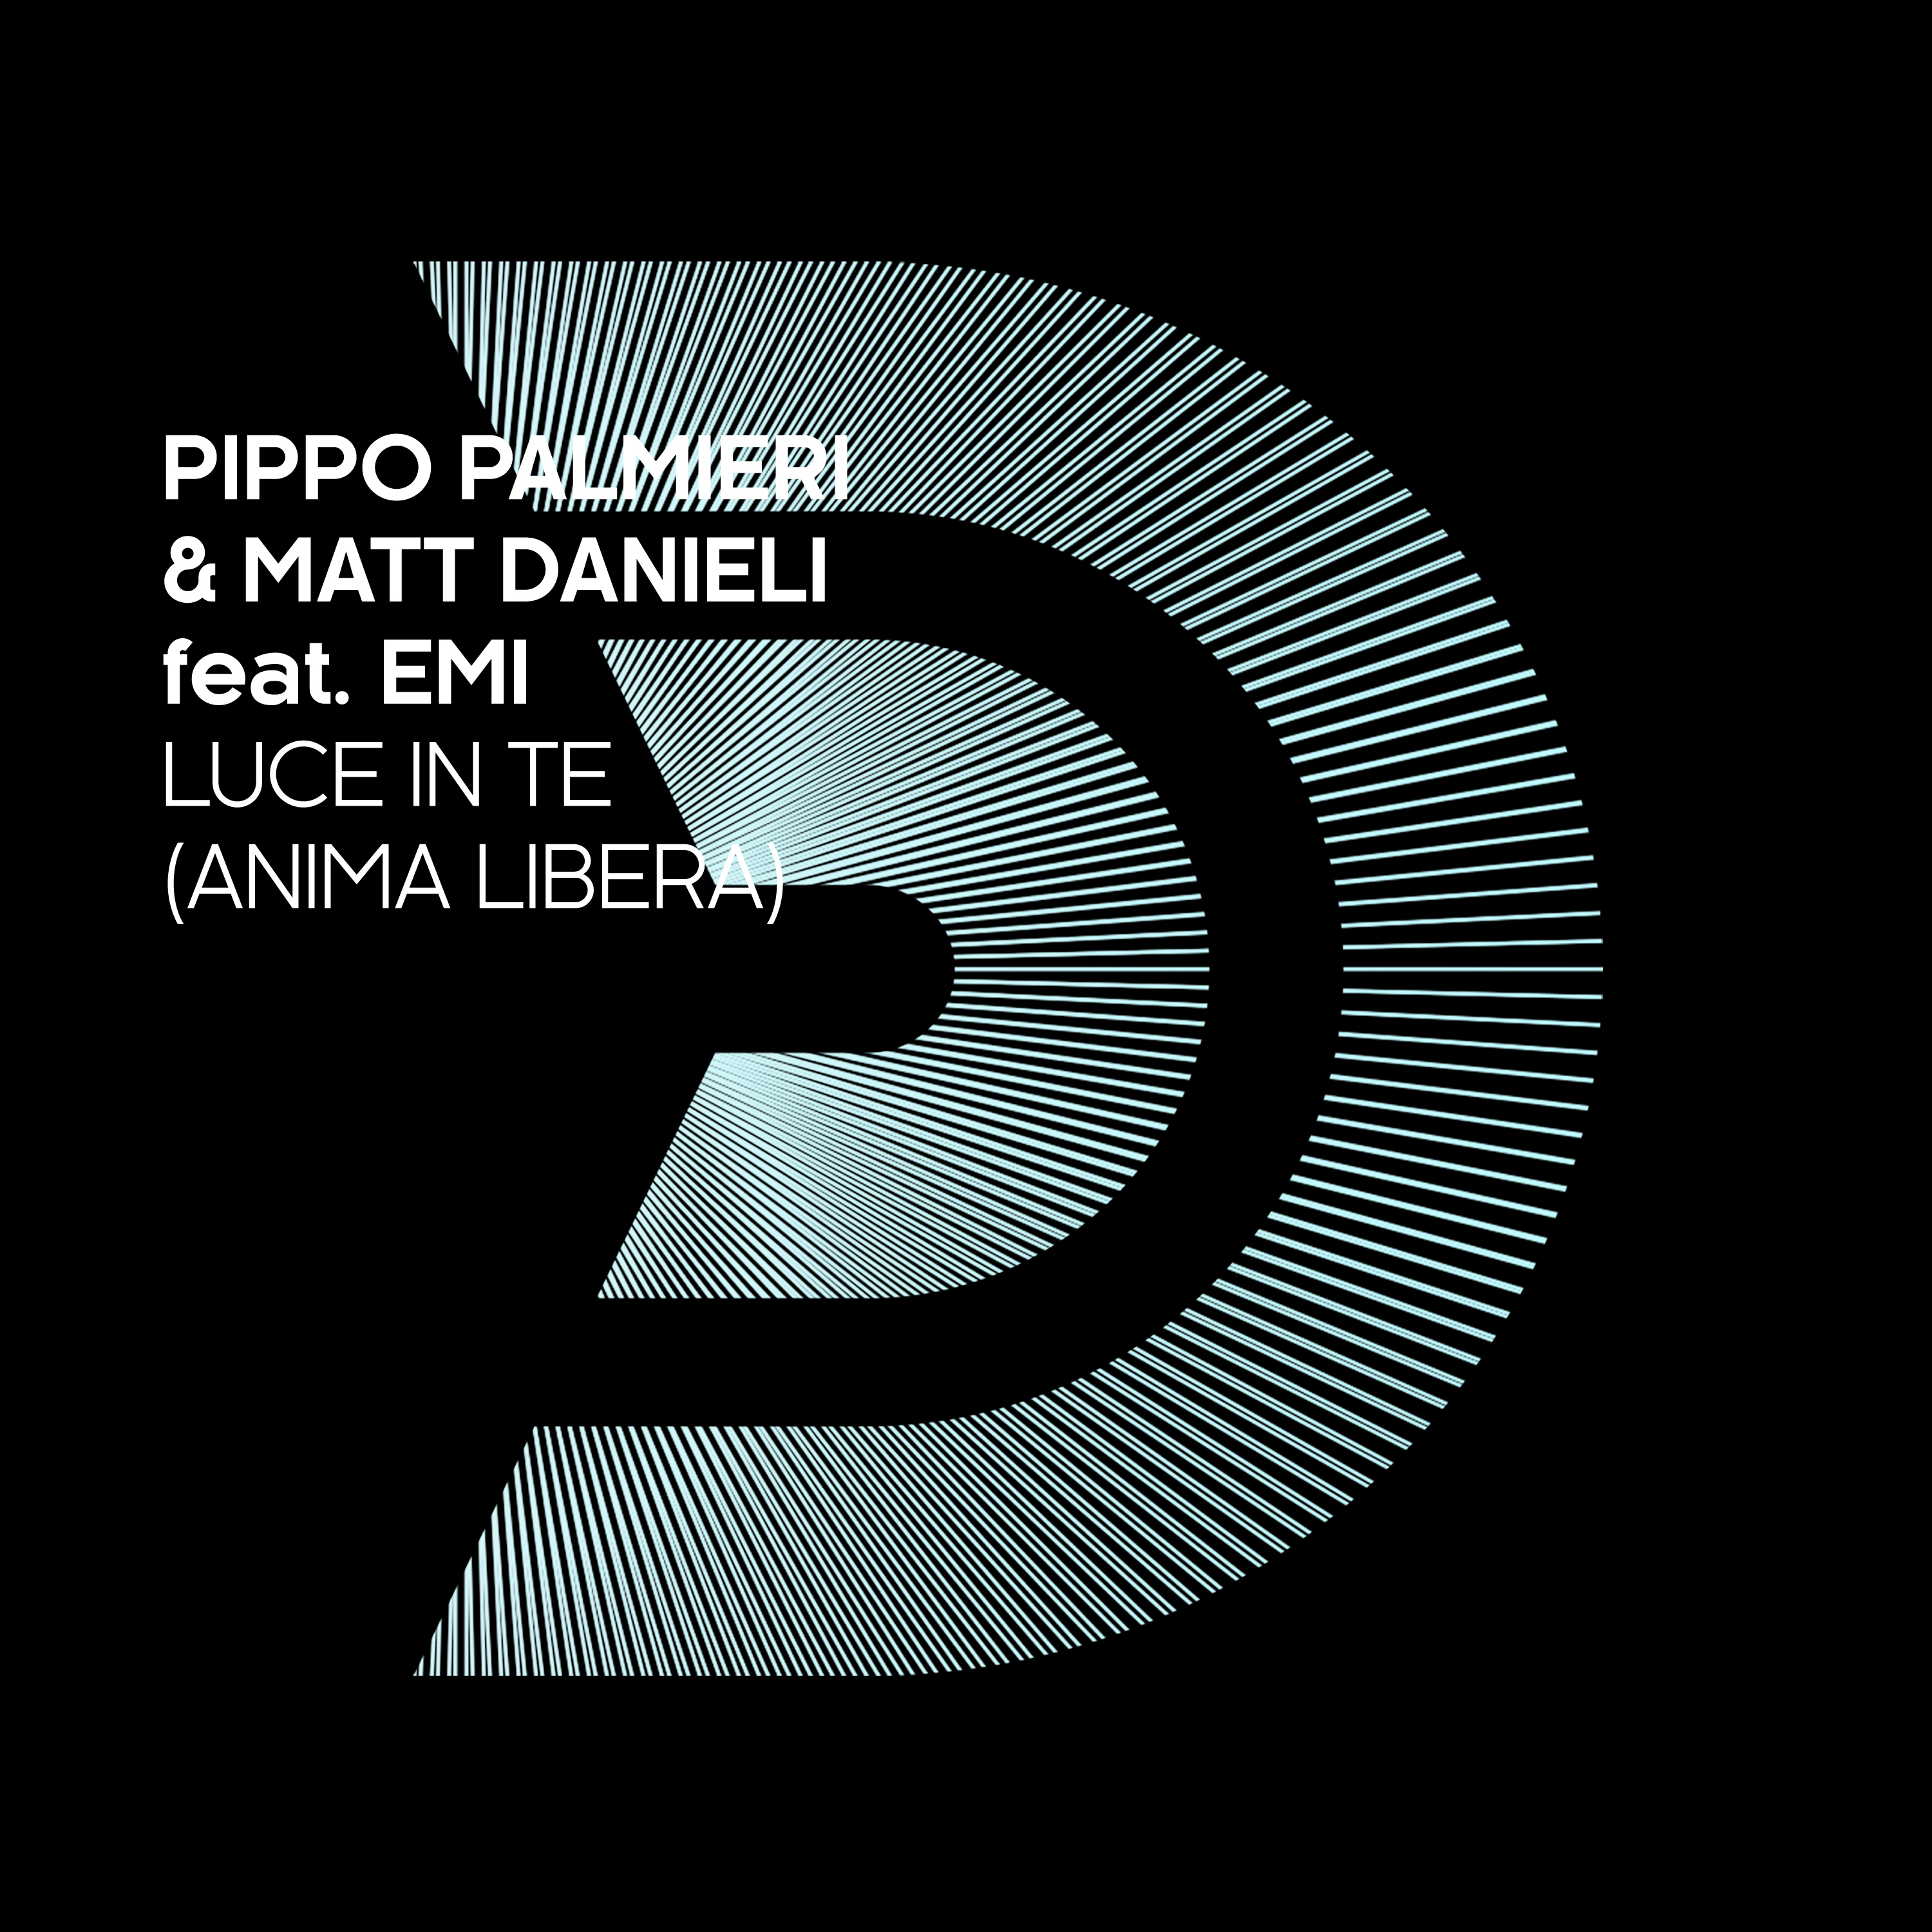 PIPPO PALMIERI & MATT DANIELI feat. EMI - Luce in te (Anima libera)